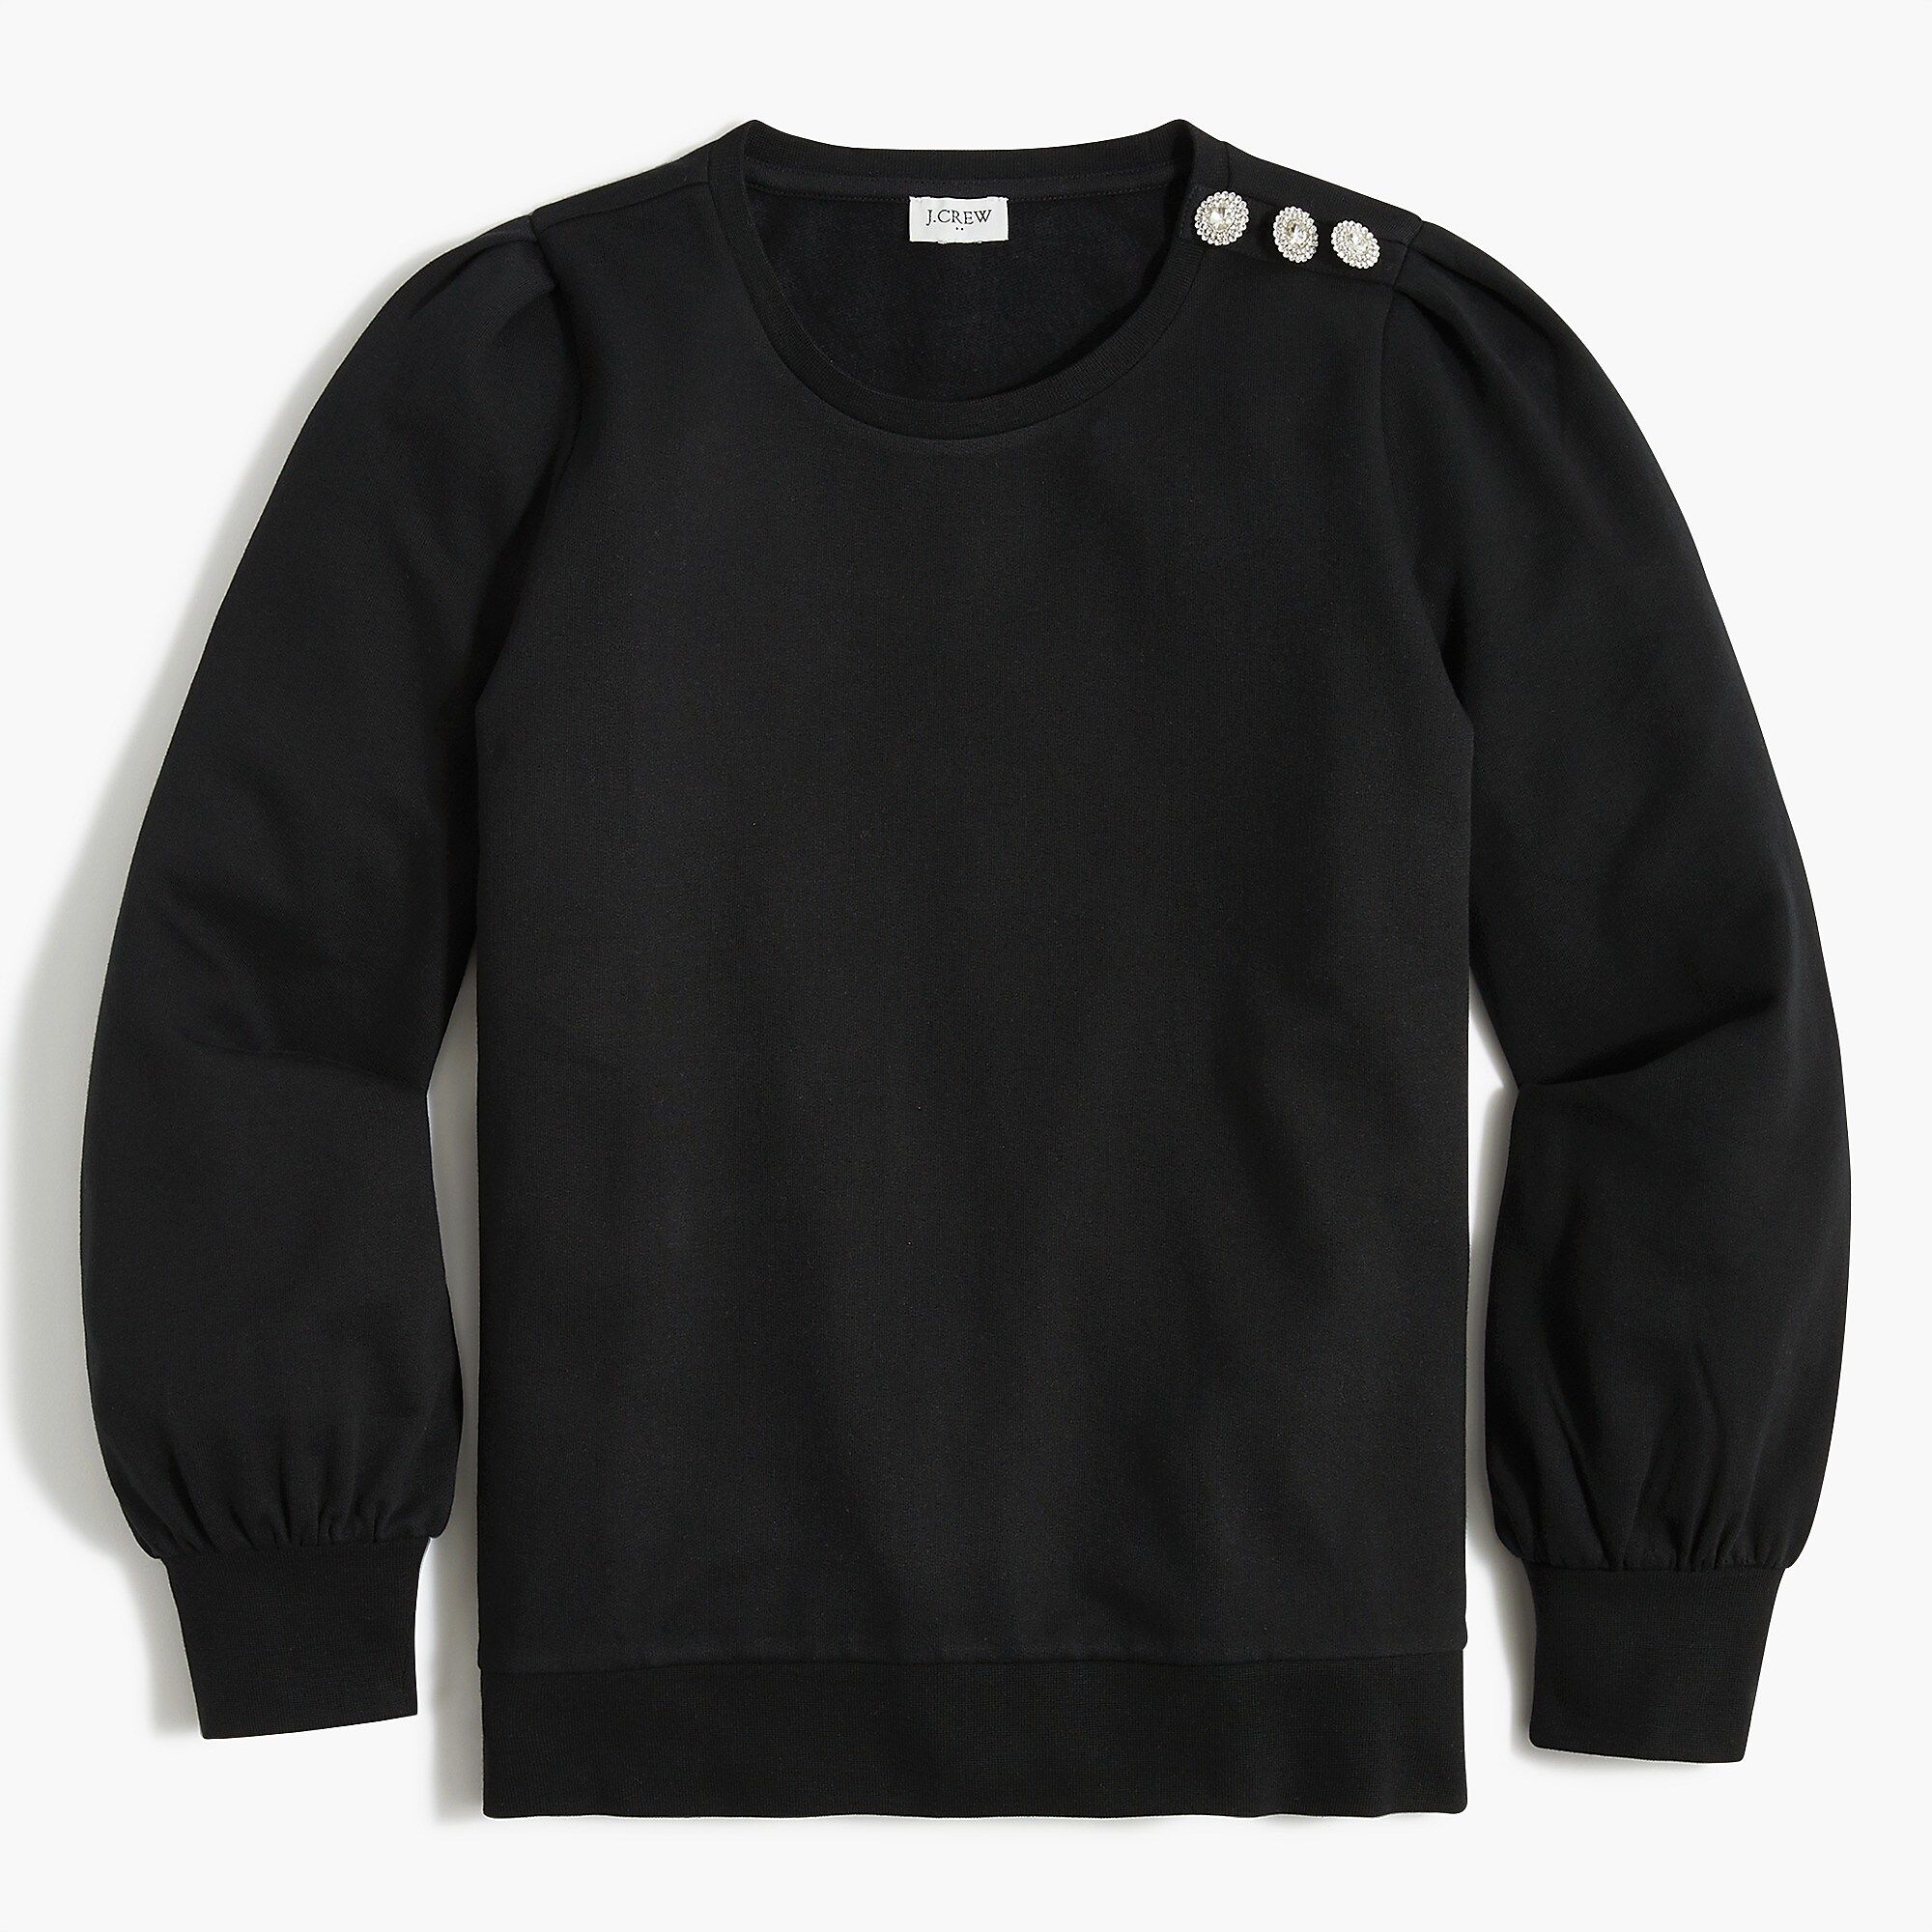 Puff-sleeve sweatshirt with jewel buttons | J.Crew Factory